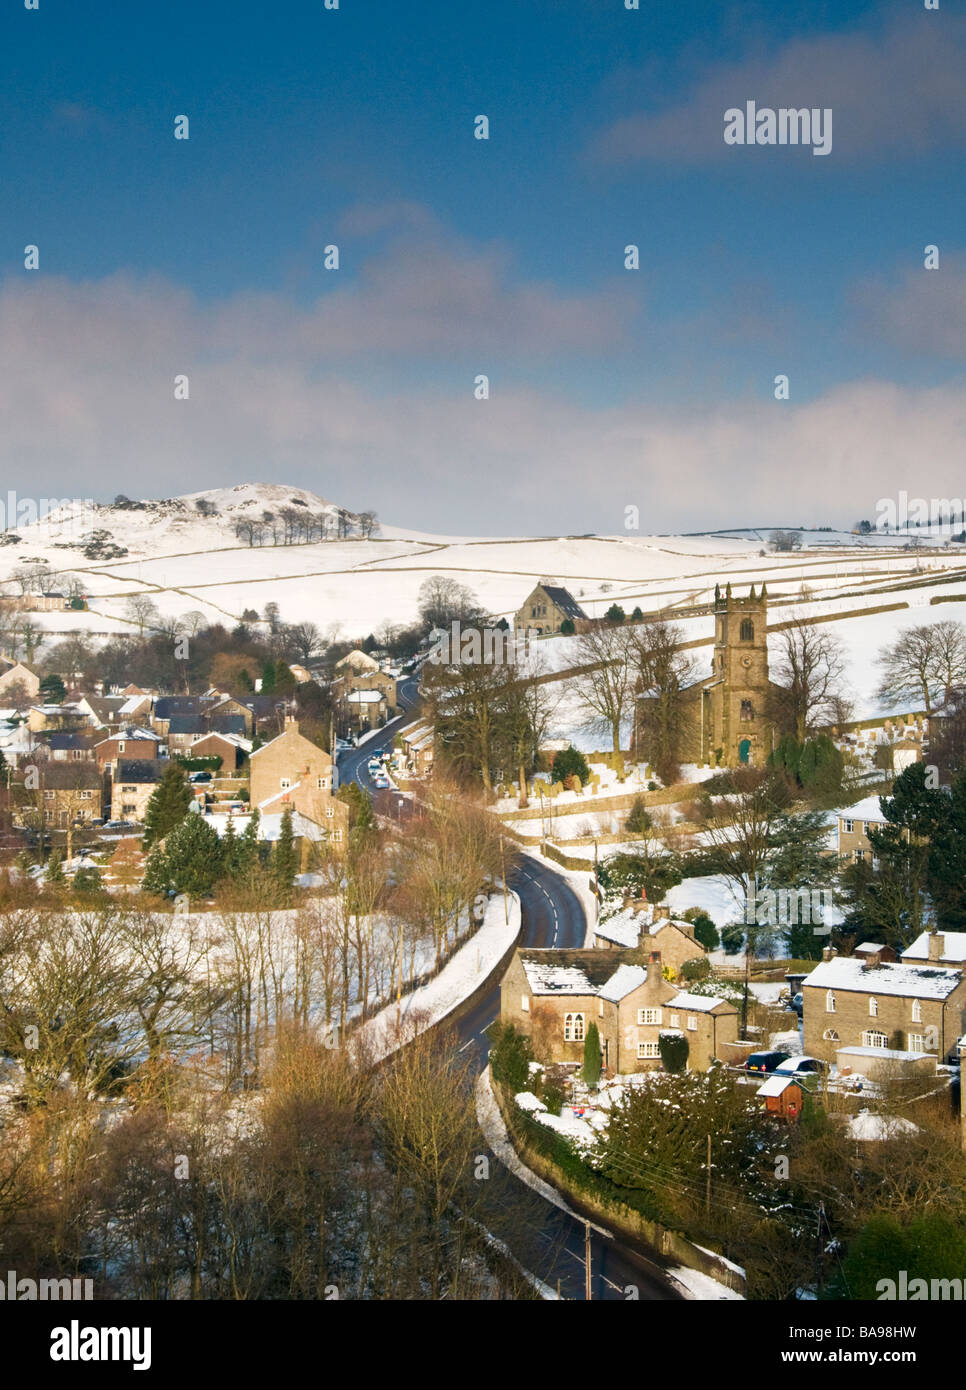 Village of Rainow in Winter, Peak District National Park, Cheshire, England, UK Stock Photo